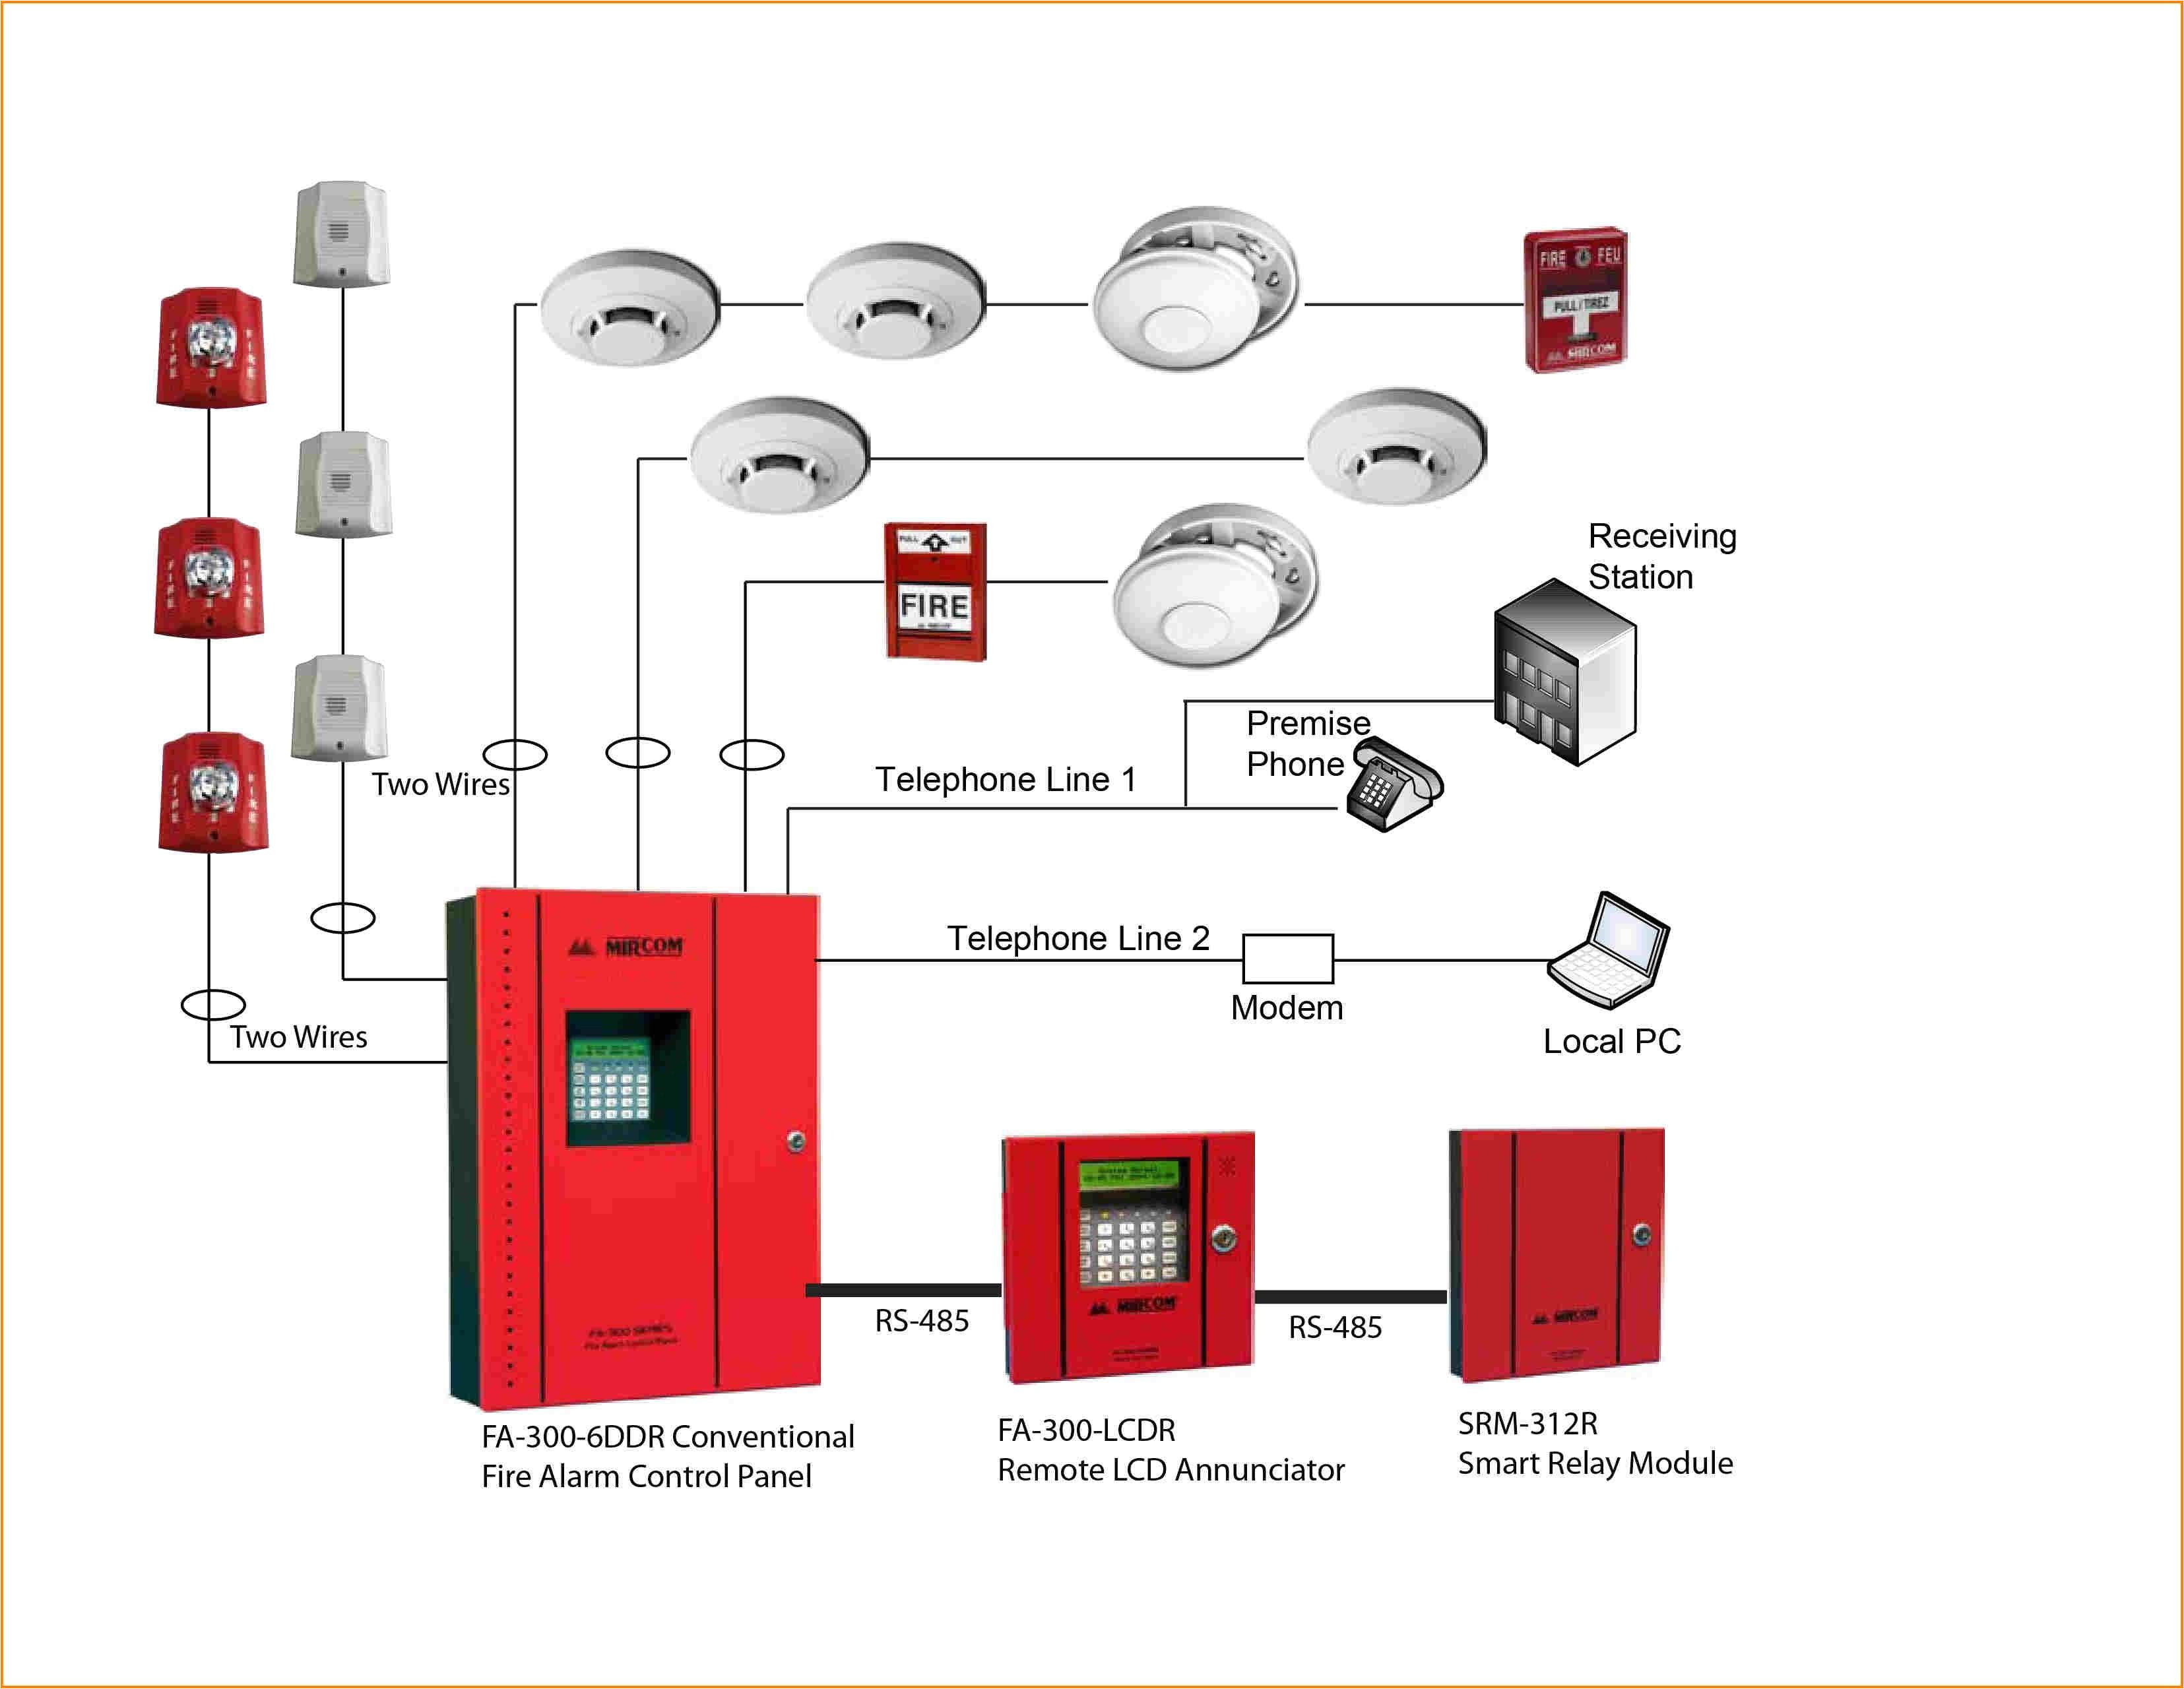 fire alarm system schematic diagram wiring diagram used conventional fire alarm system schematic diagram fire alarm